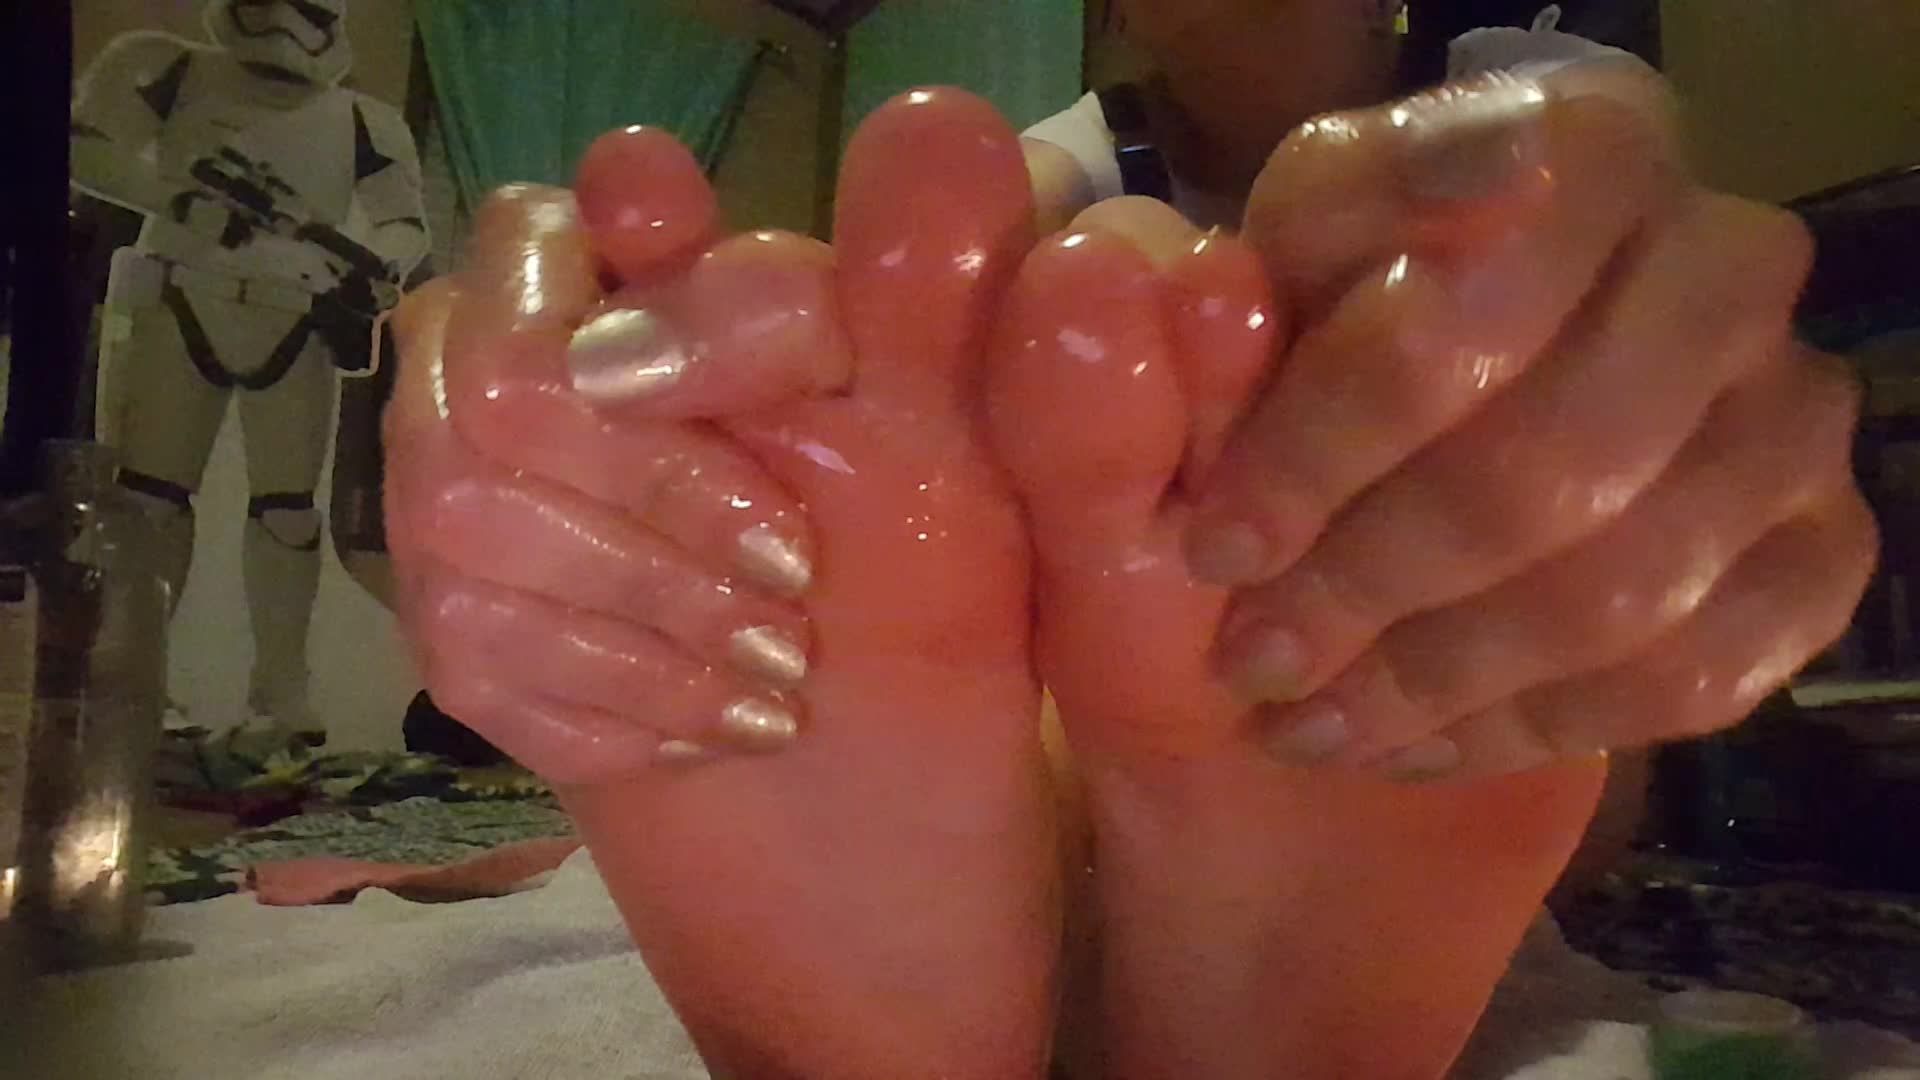 School girl oils up feet